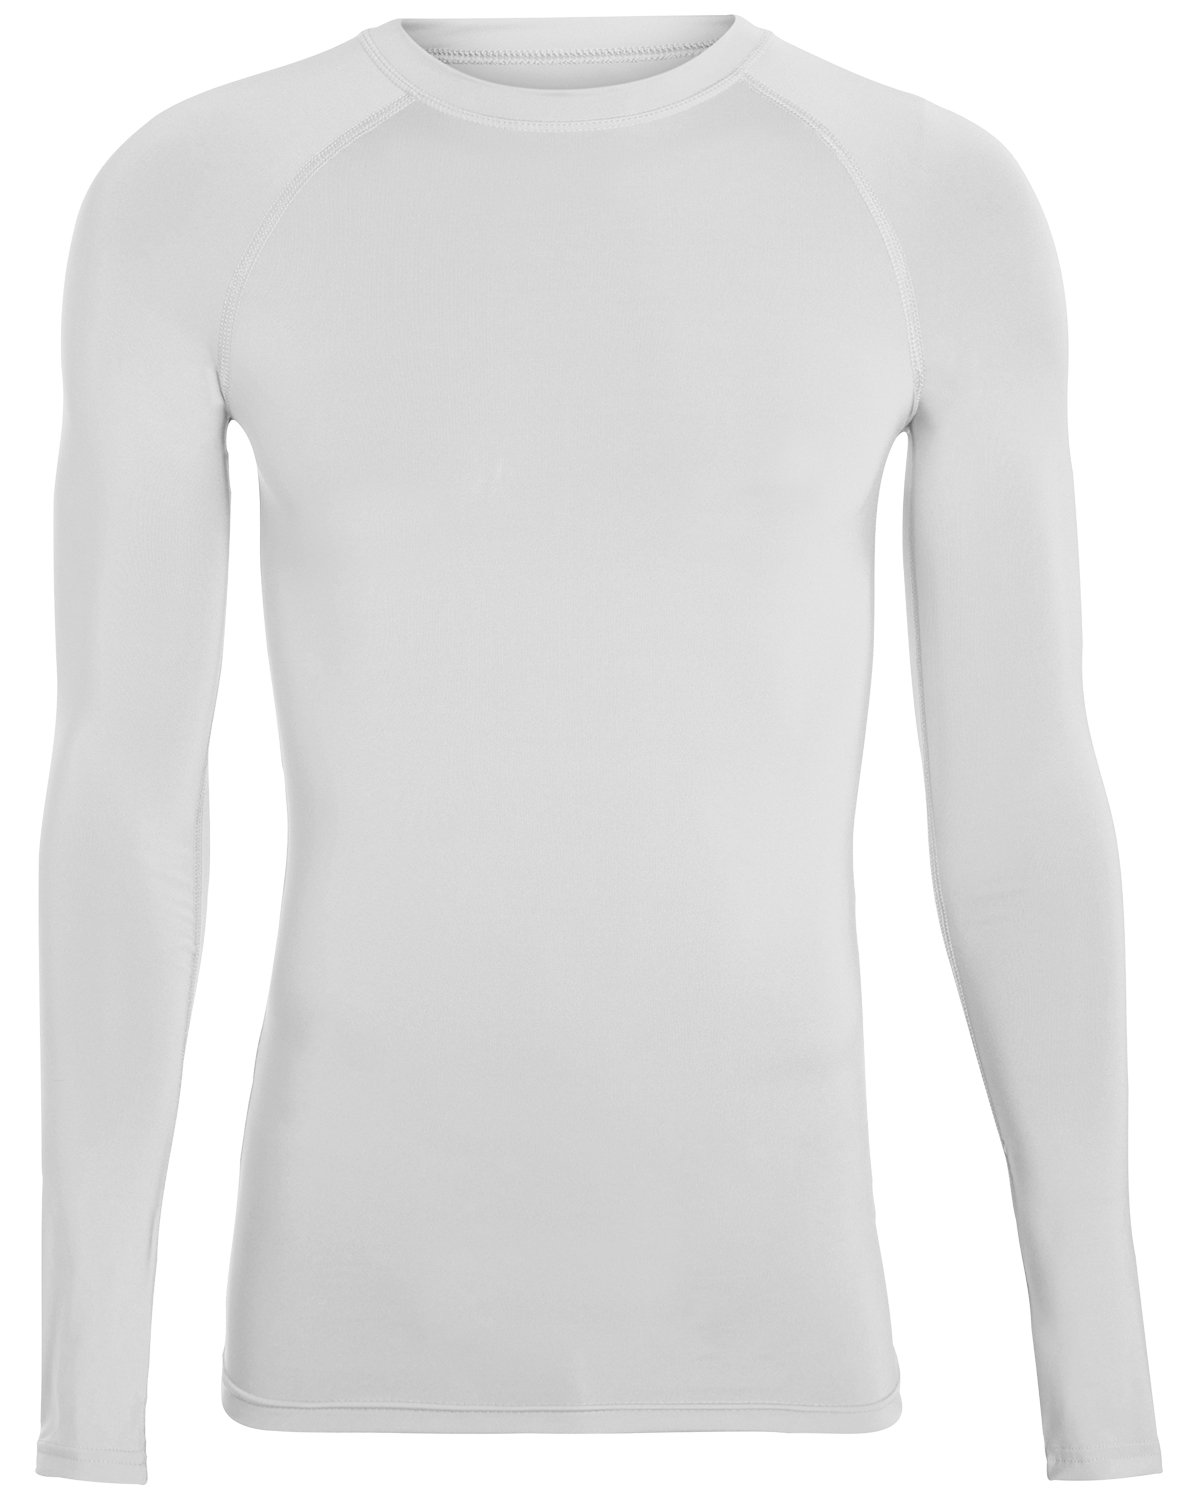 Adult Hyperform Long-Sleeve Compression Shirt-